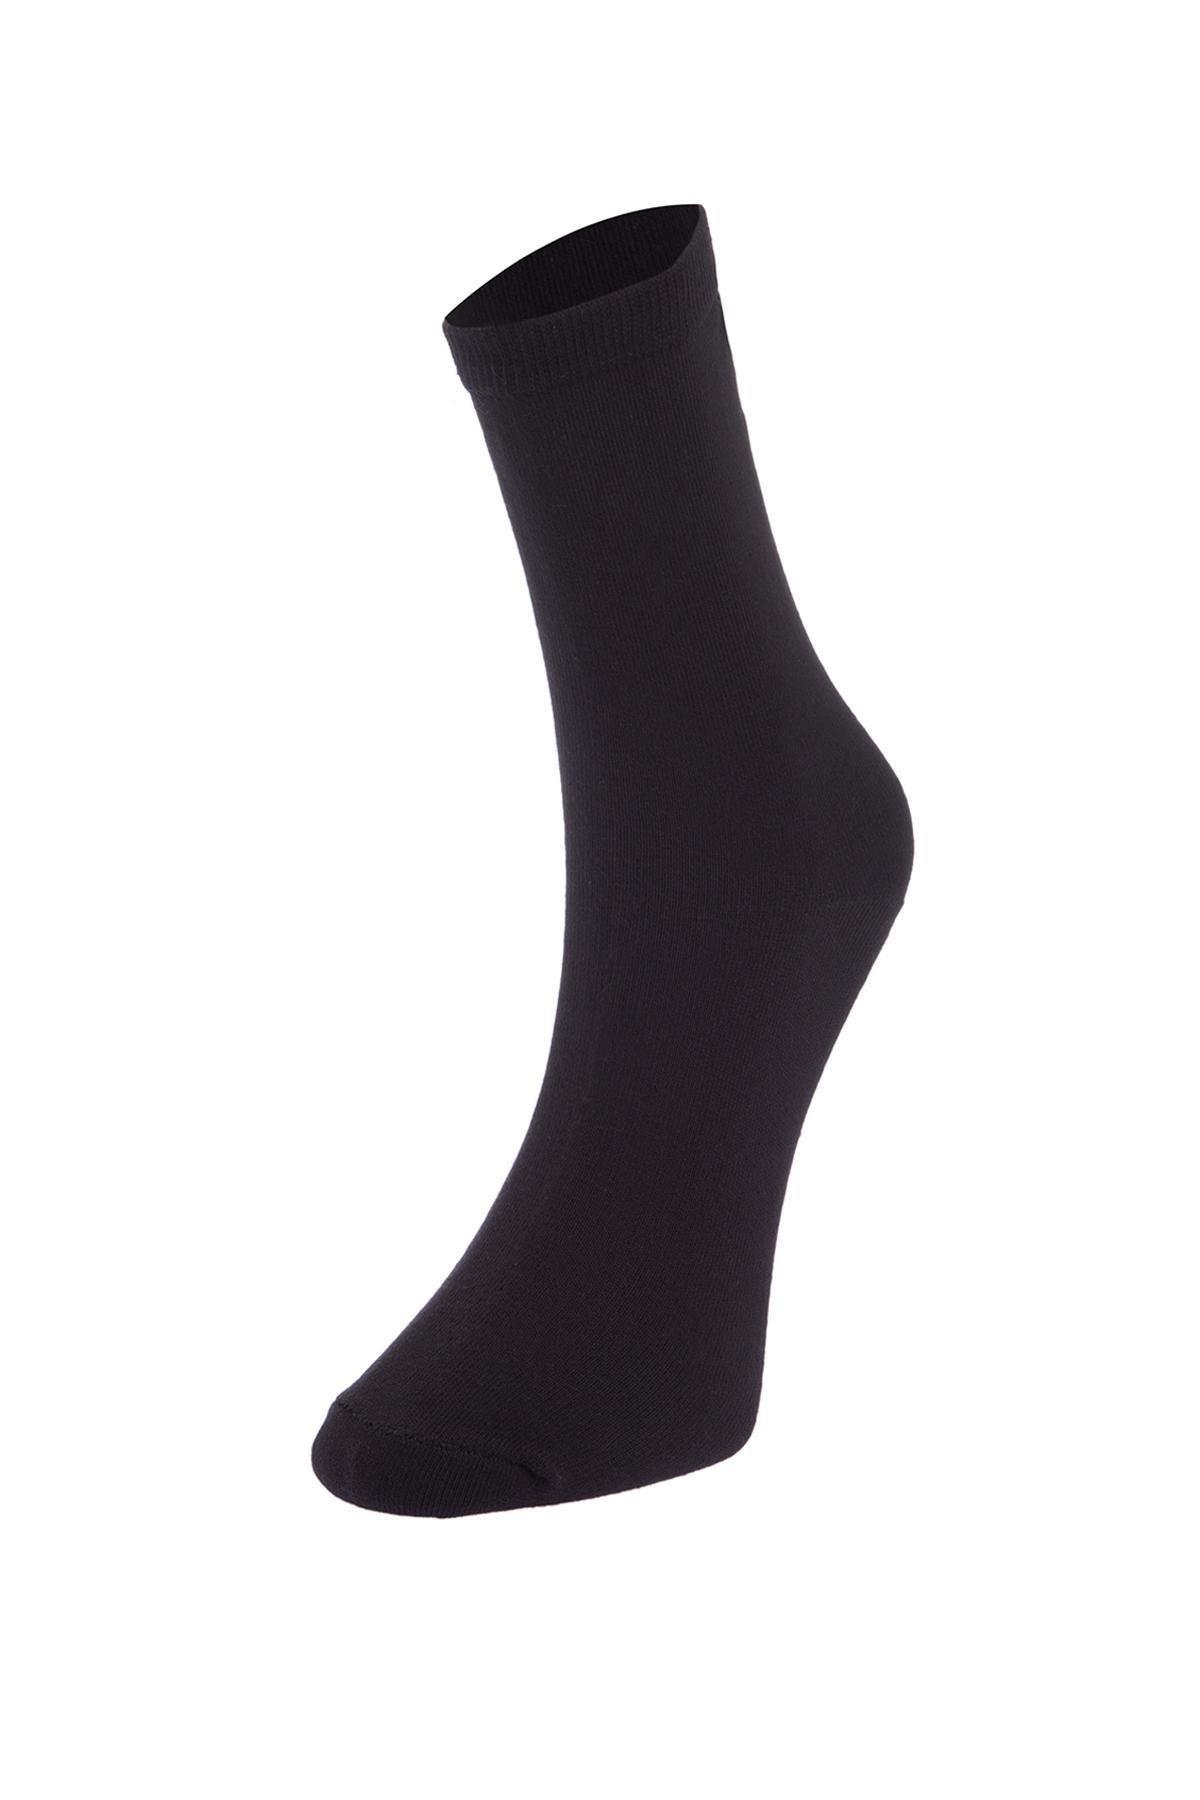 Trendyol - Black Striped Mix Pattern Long Socks, Set Of 5